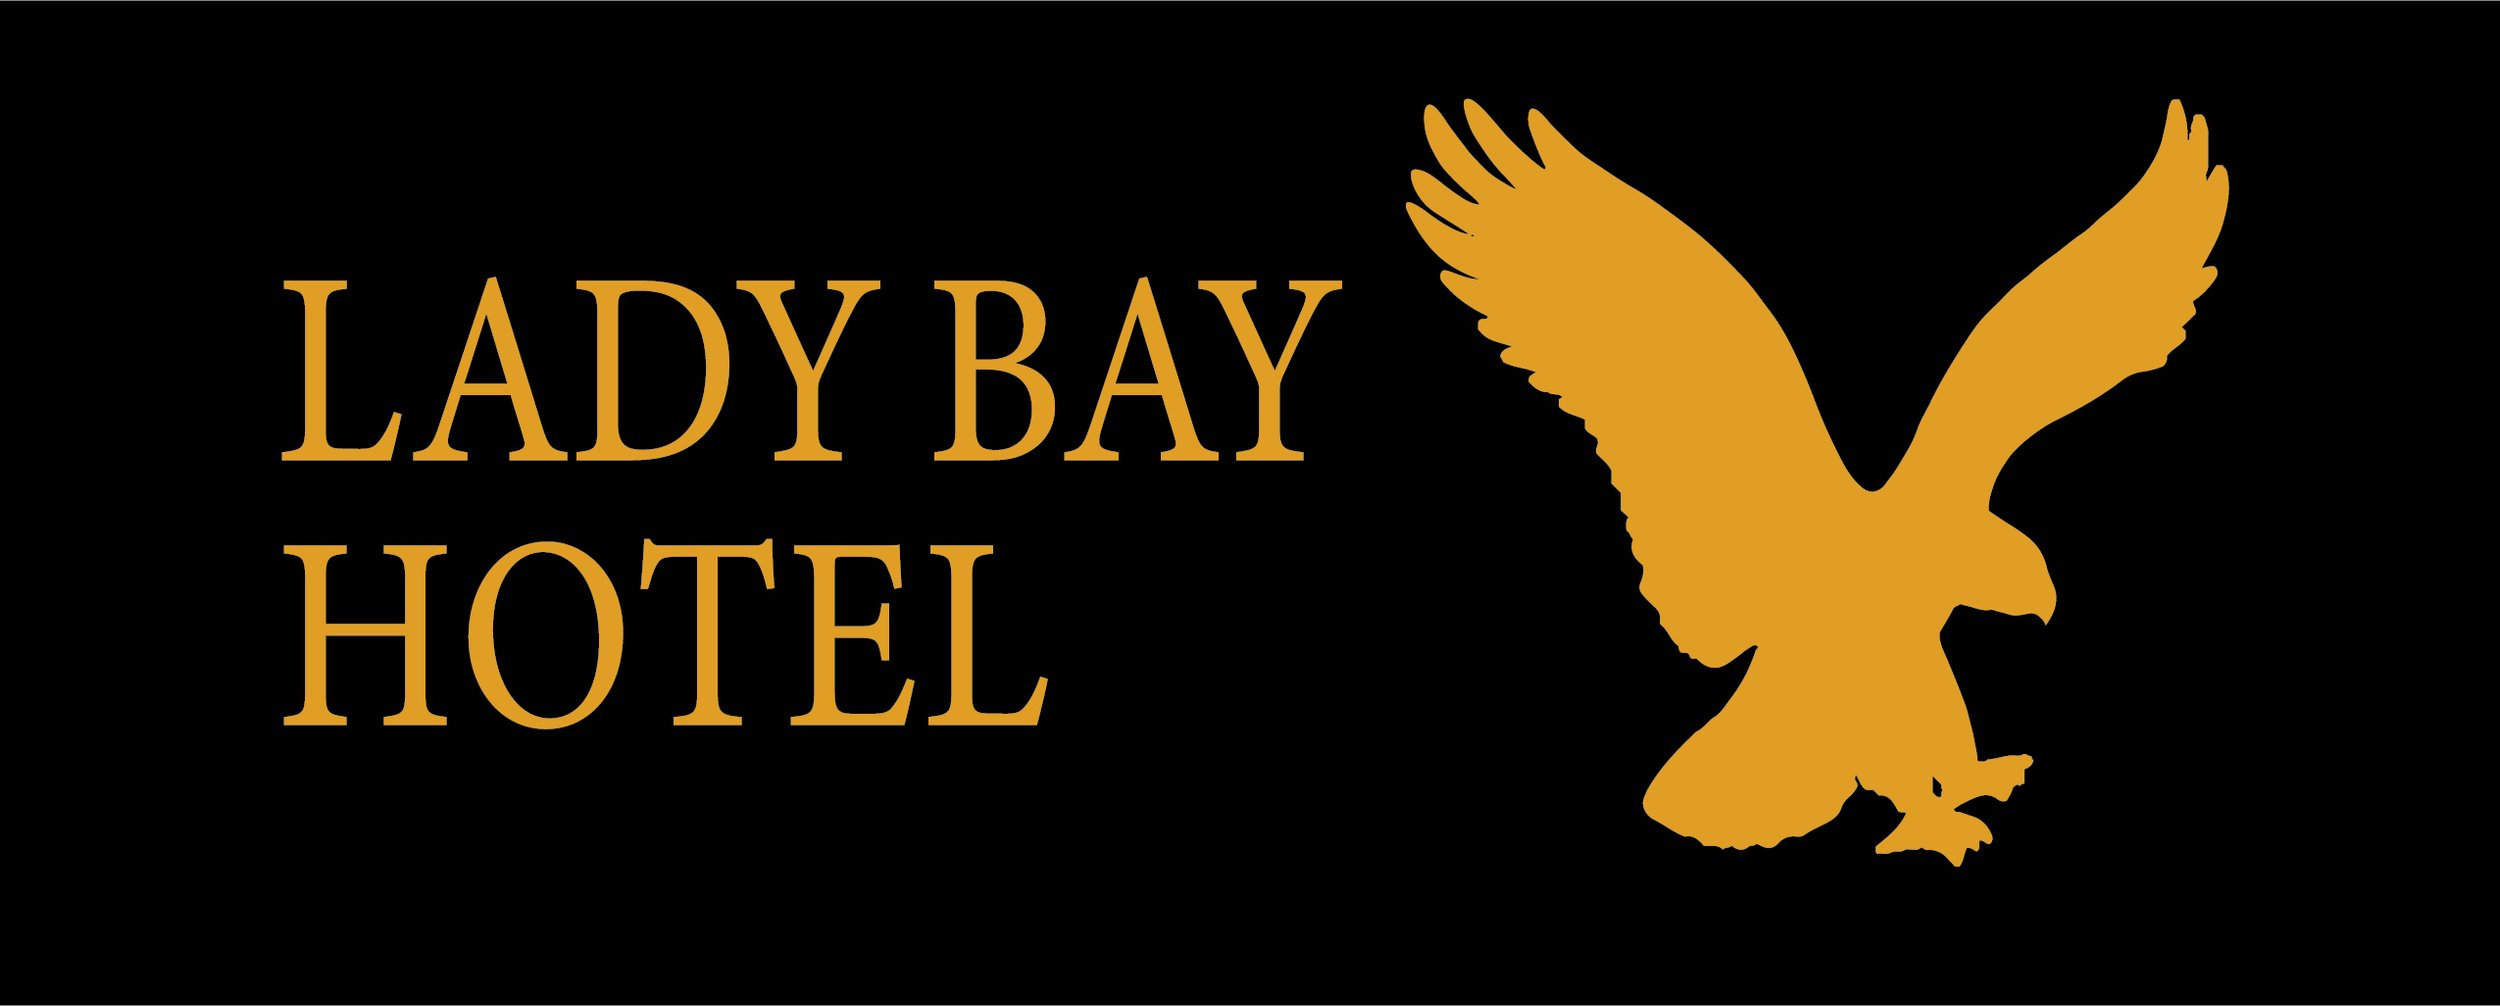 Lady Bay Hotel Logo_on black.jpg